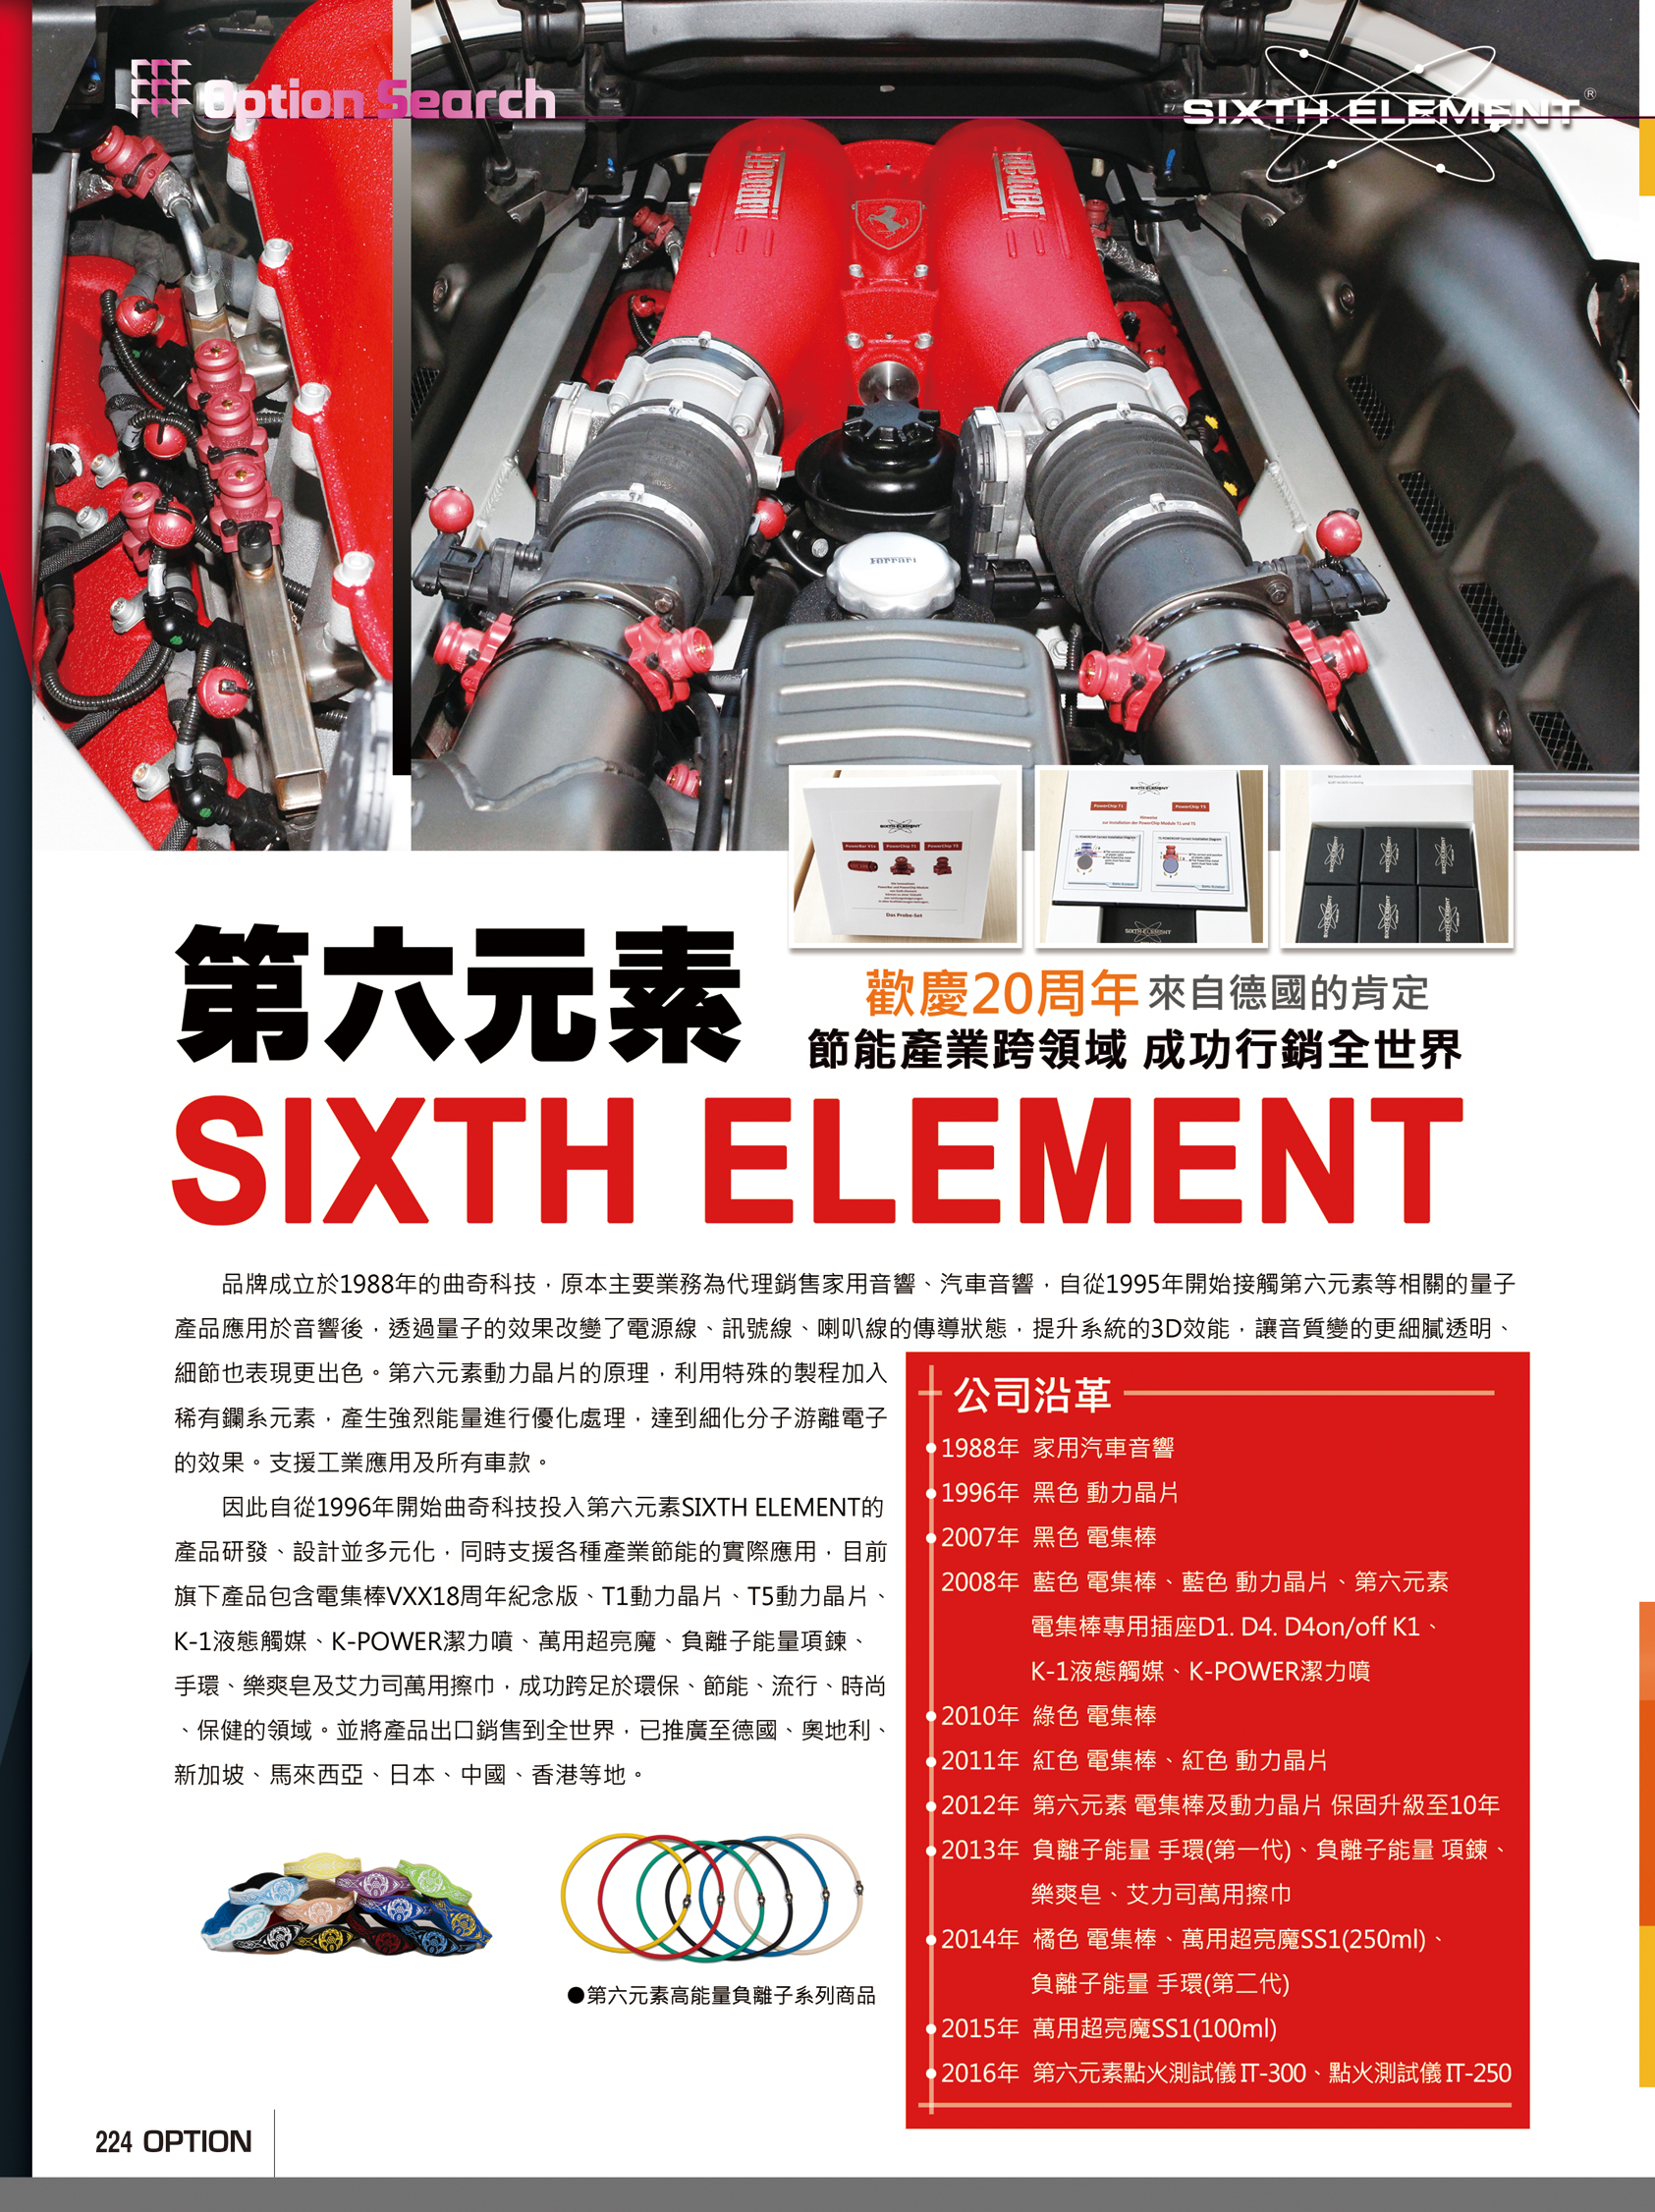 STAGE 第六元素 POWERCHIP POWER CHIP 動力晶片 K-1液態觸媒 K-1 Fuel Saving Catalyzer K-POWER 潔力噴 第六元素 紅色 POWER BAR 電集棒 V1s 第六元素 紅色V1s POWERBAR 紅色超級版 第六元素SIXTH ELEMENT 歡慶20周年 來自德國的肯定 節能產業跨領域 成功行銷全世界